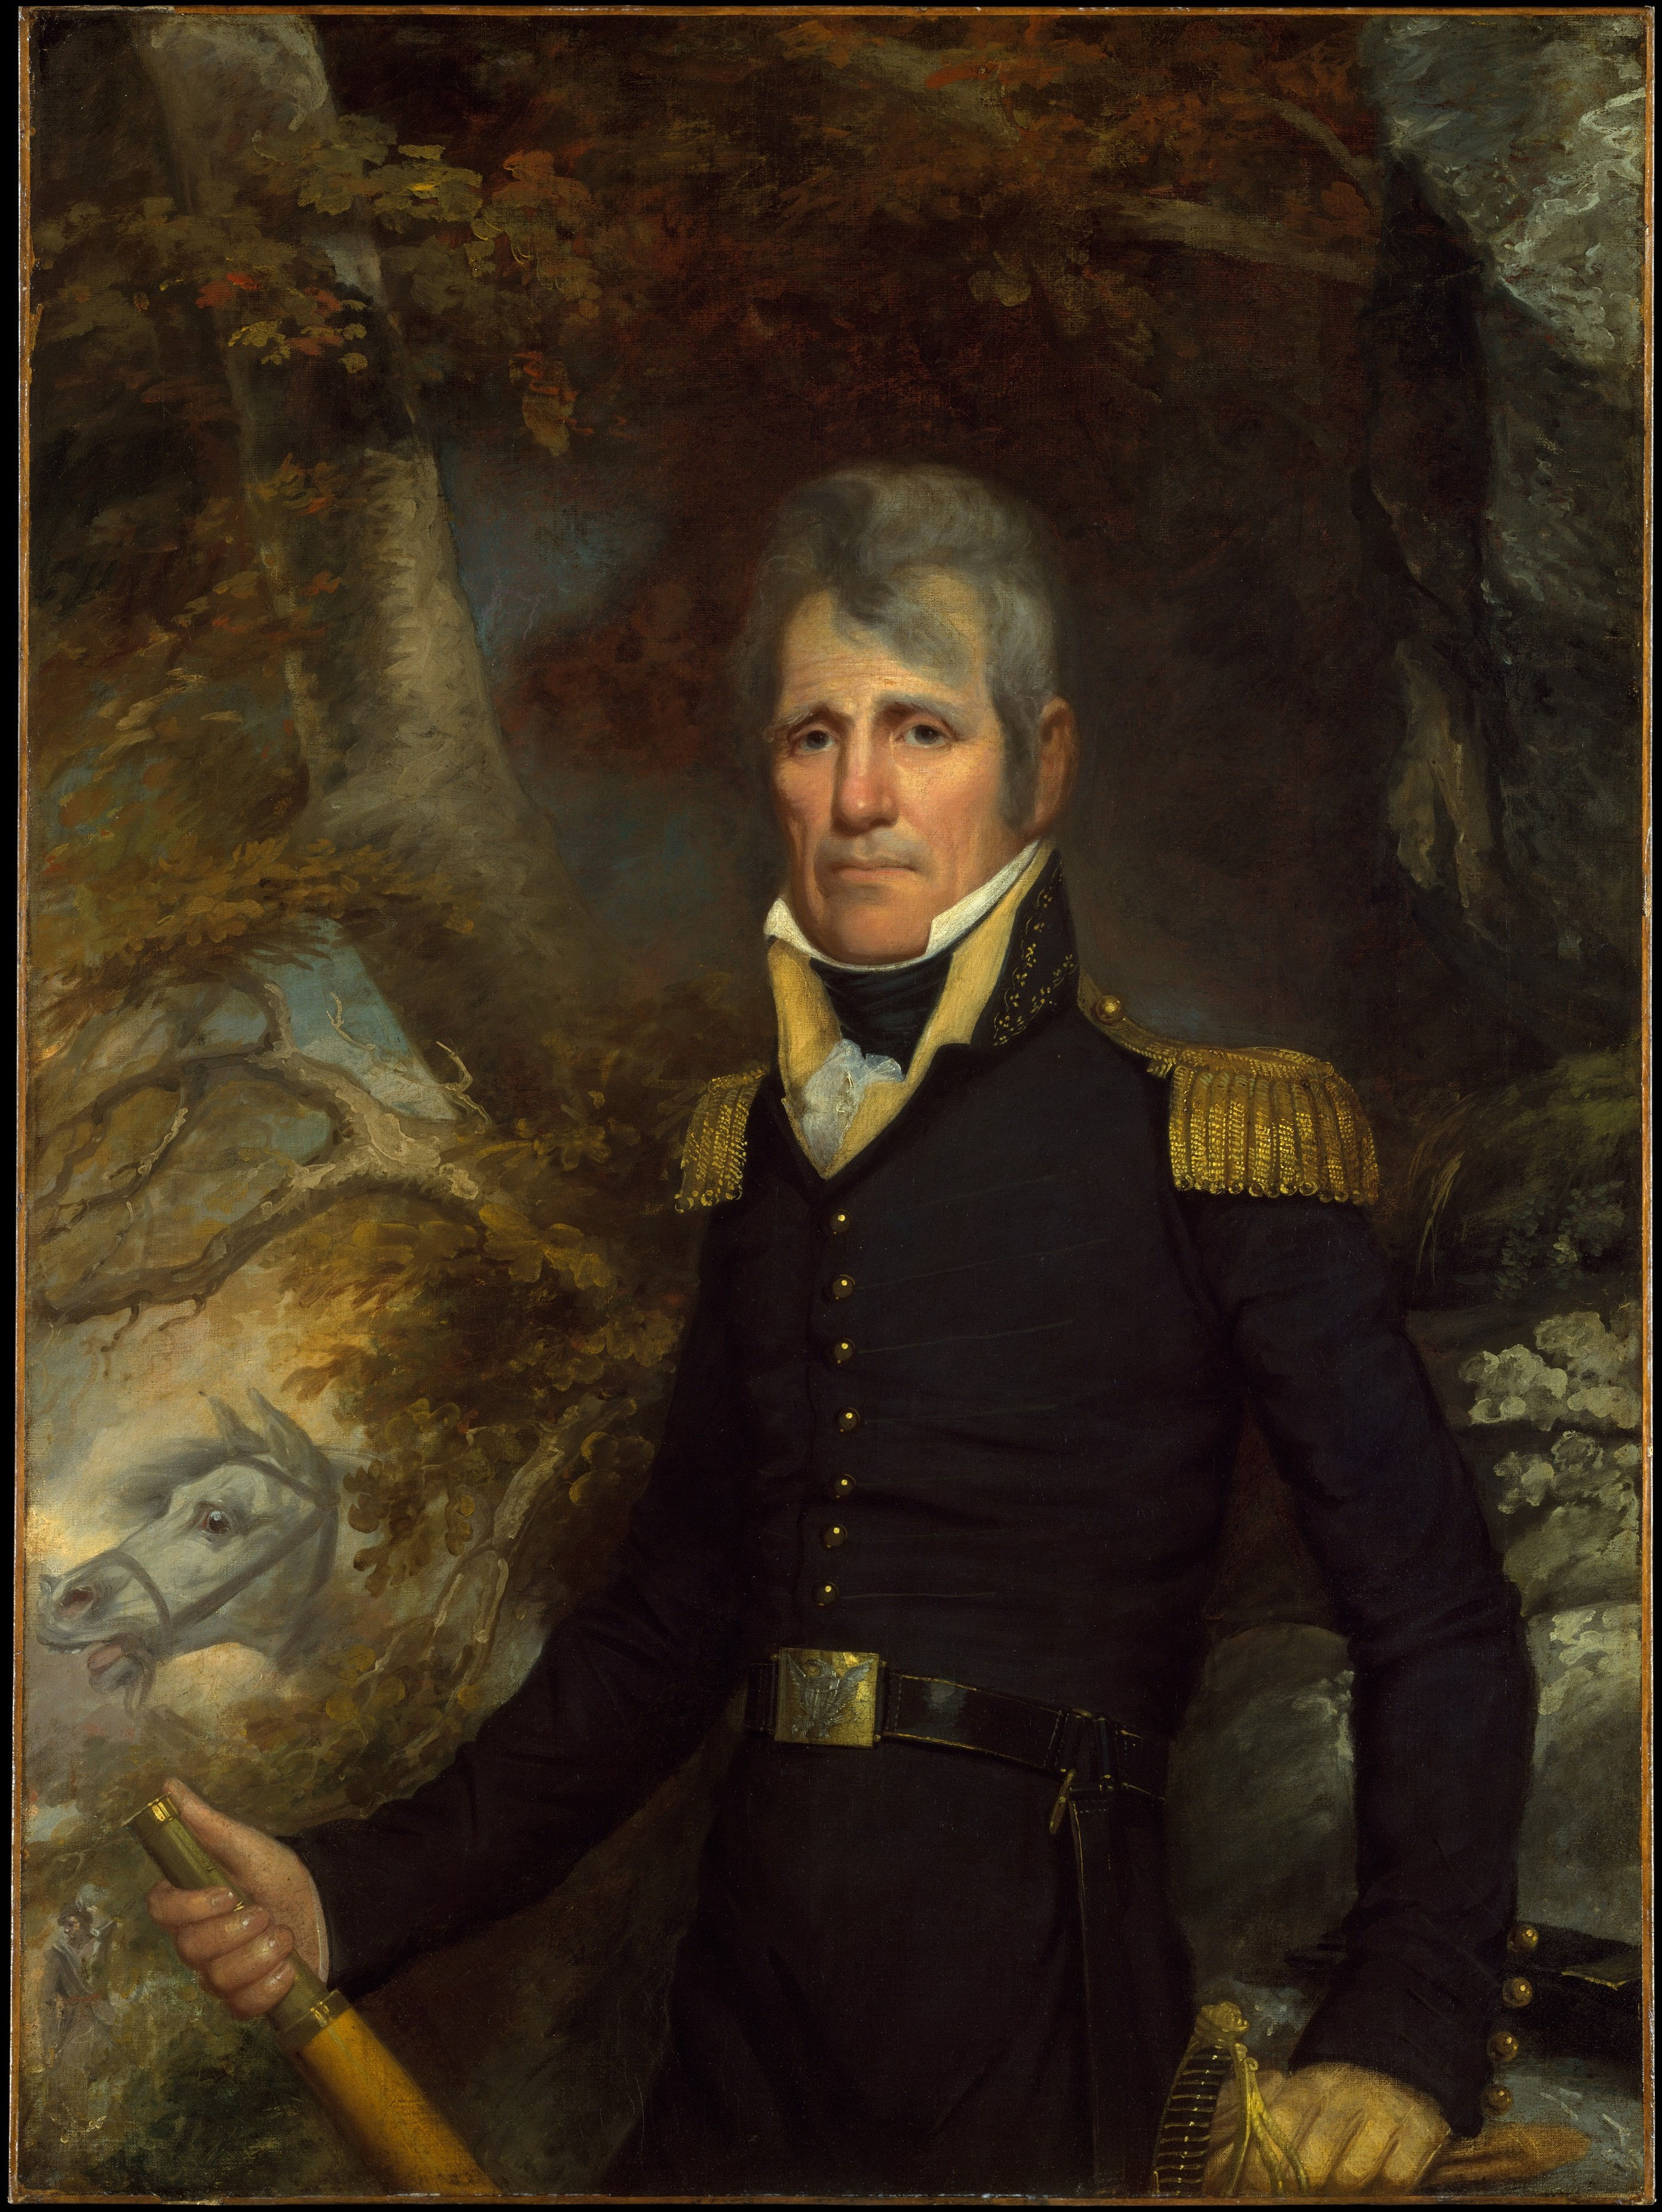 General Andrew Jackson by John Wesley Jarvis